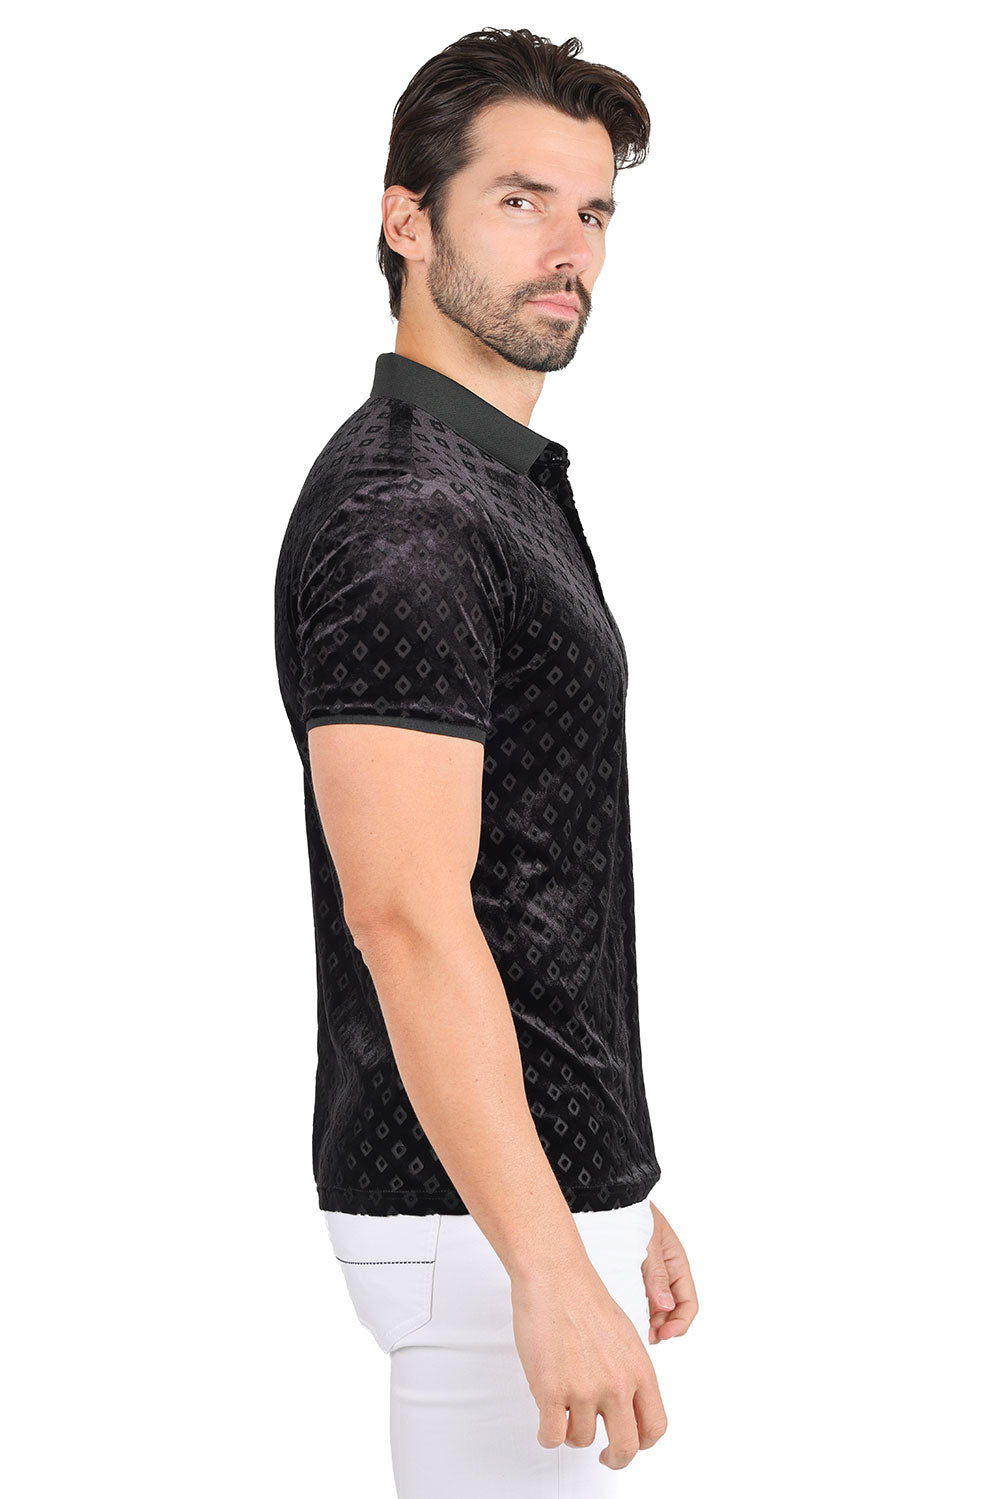 BARABAS Men's Textured Diamond Design Short Sleeve Polo Shirts 3PP837 Black